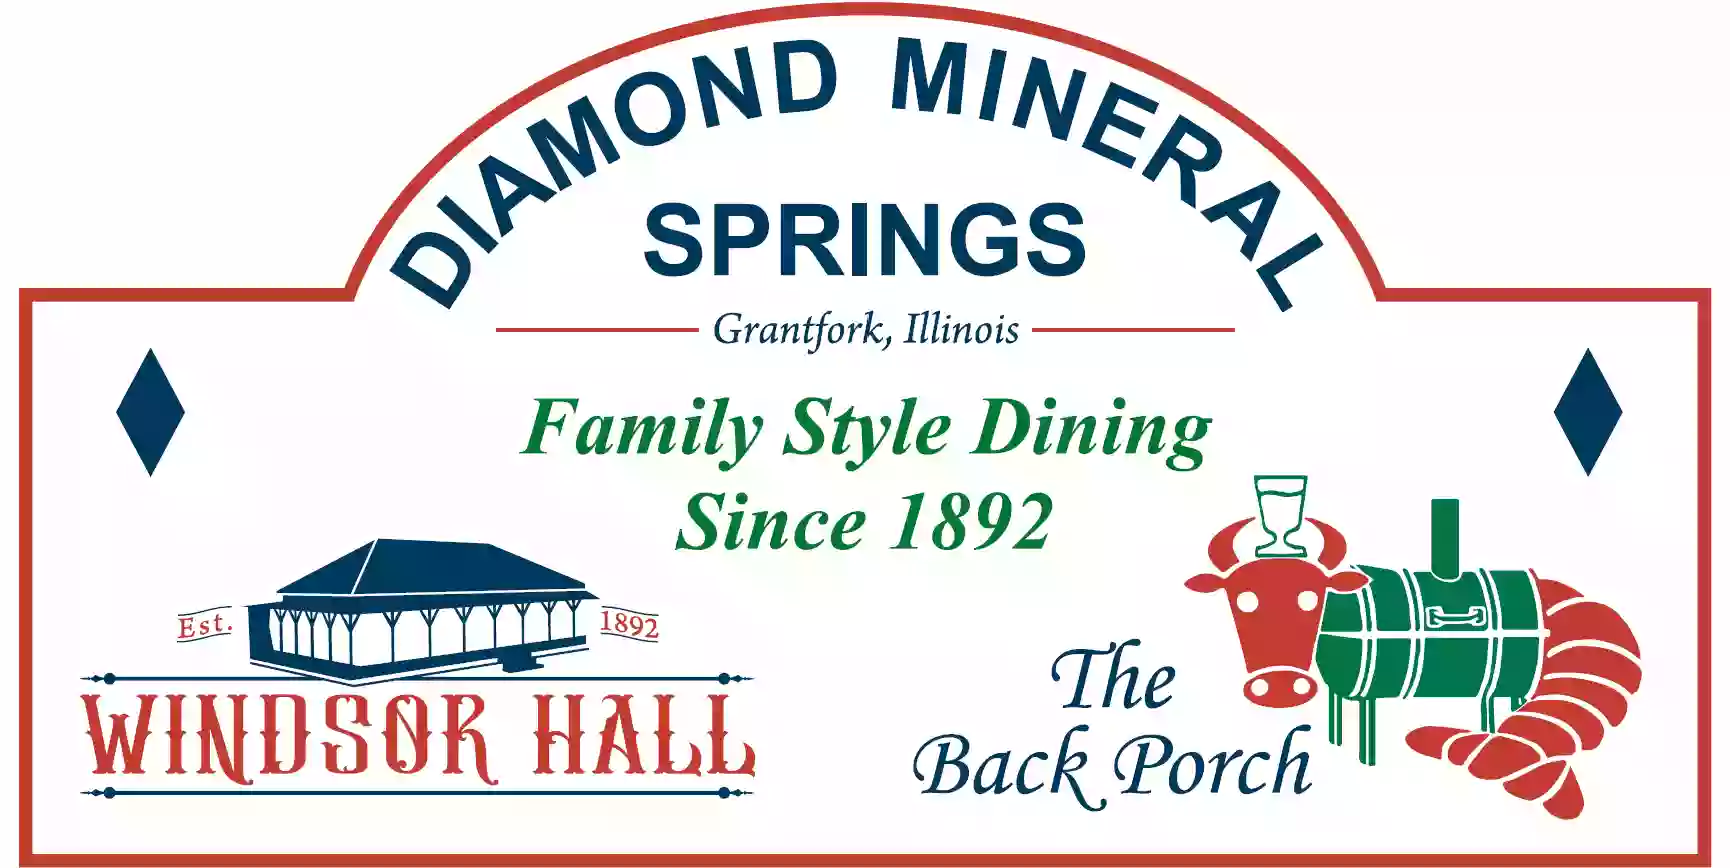 Diamond Mineral Springs